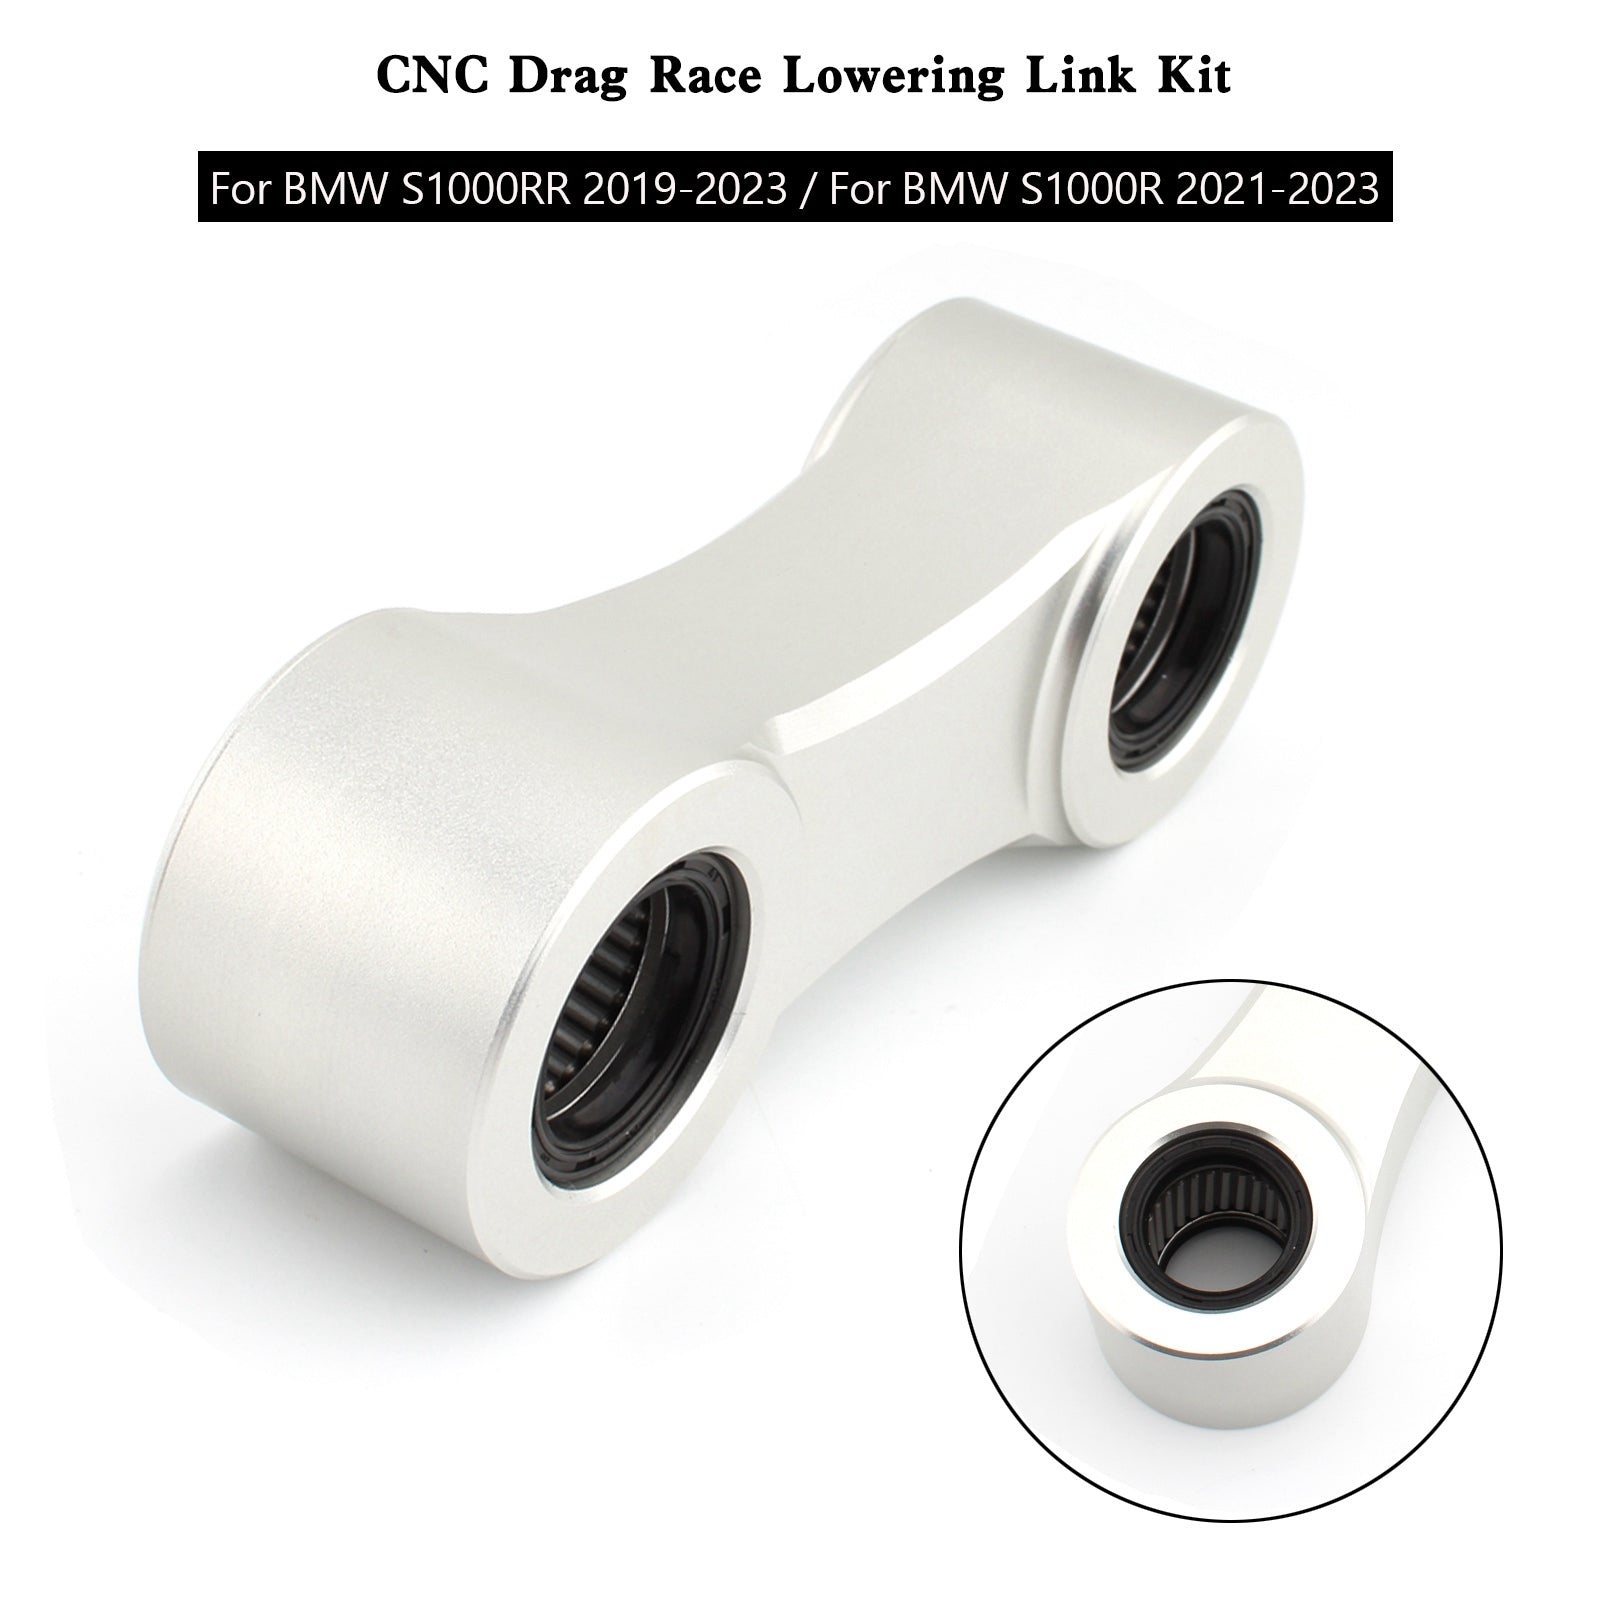 CNC Aluminum Drag Race Lowering Link Kit For BMW S1000RR S1000R 2019-2023